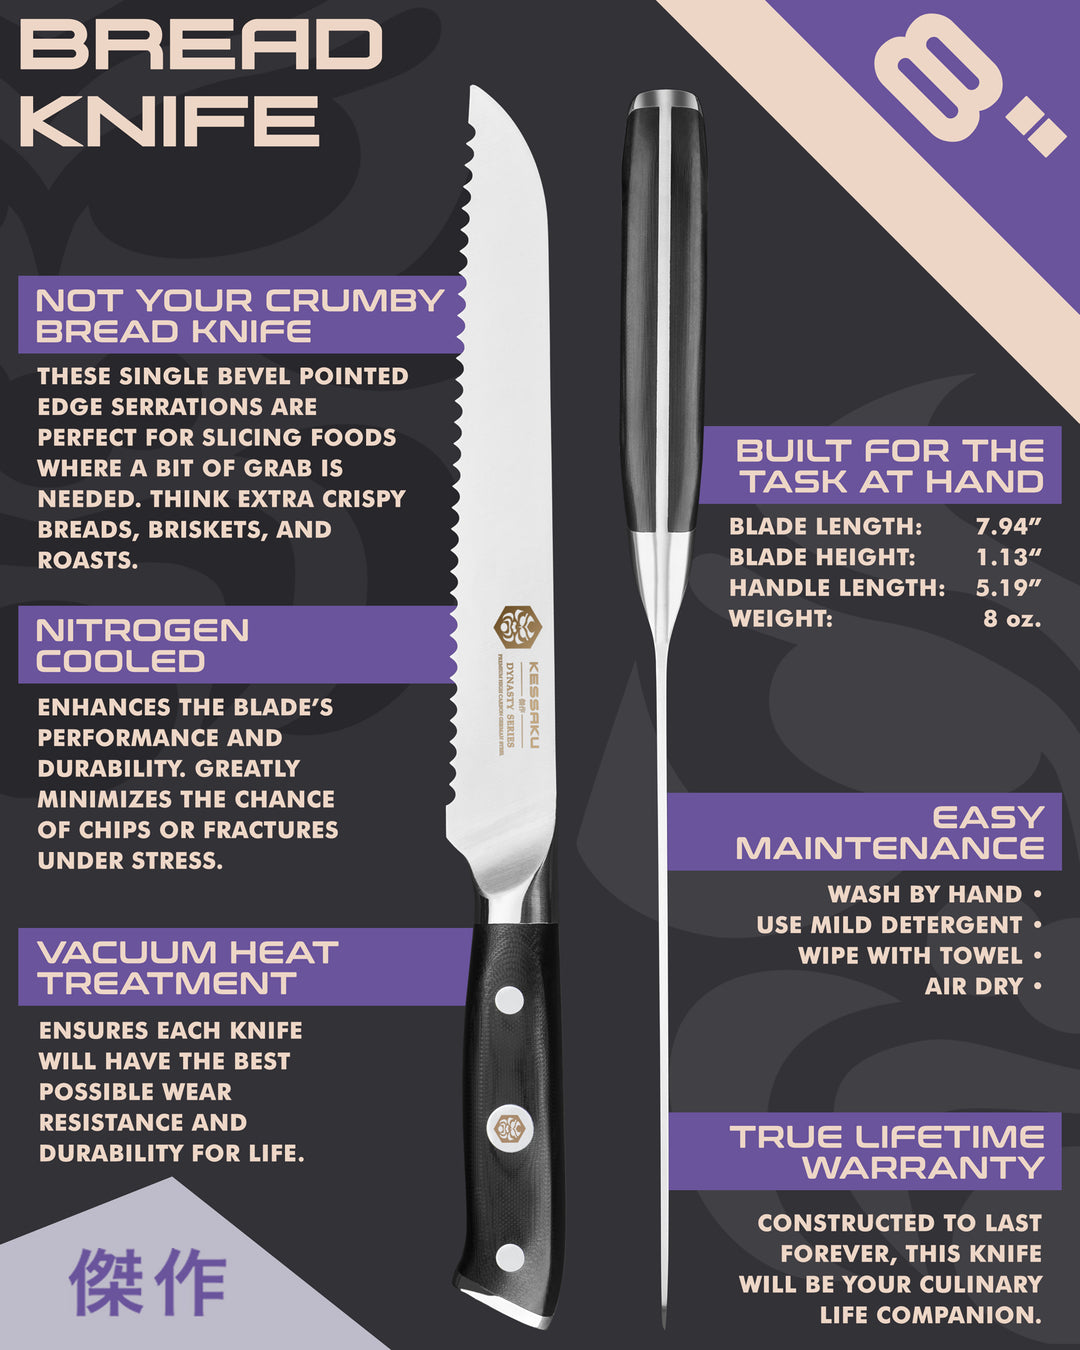 Kessaku Dynasty Series Nakiri Knife uses, dimensions, maintenance, warranty info, and additional blade treatments